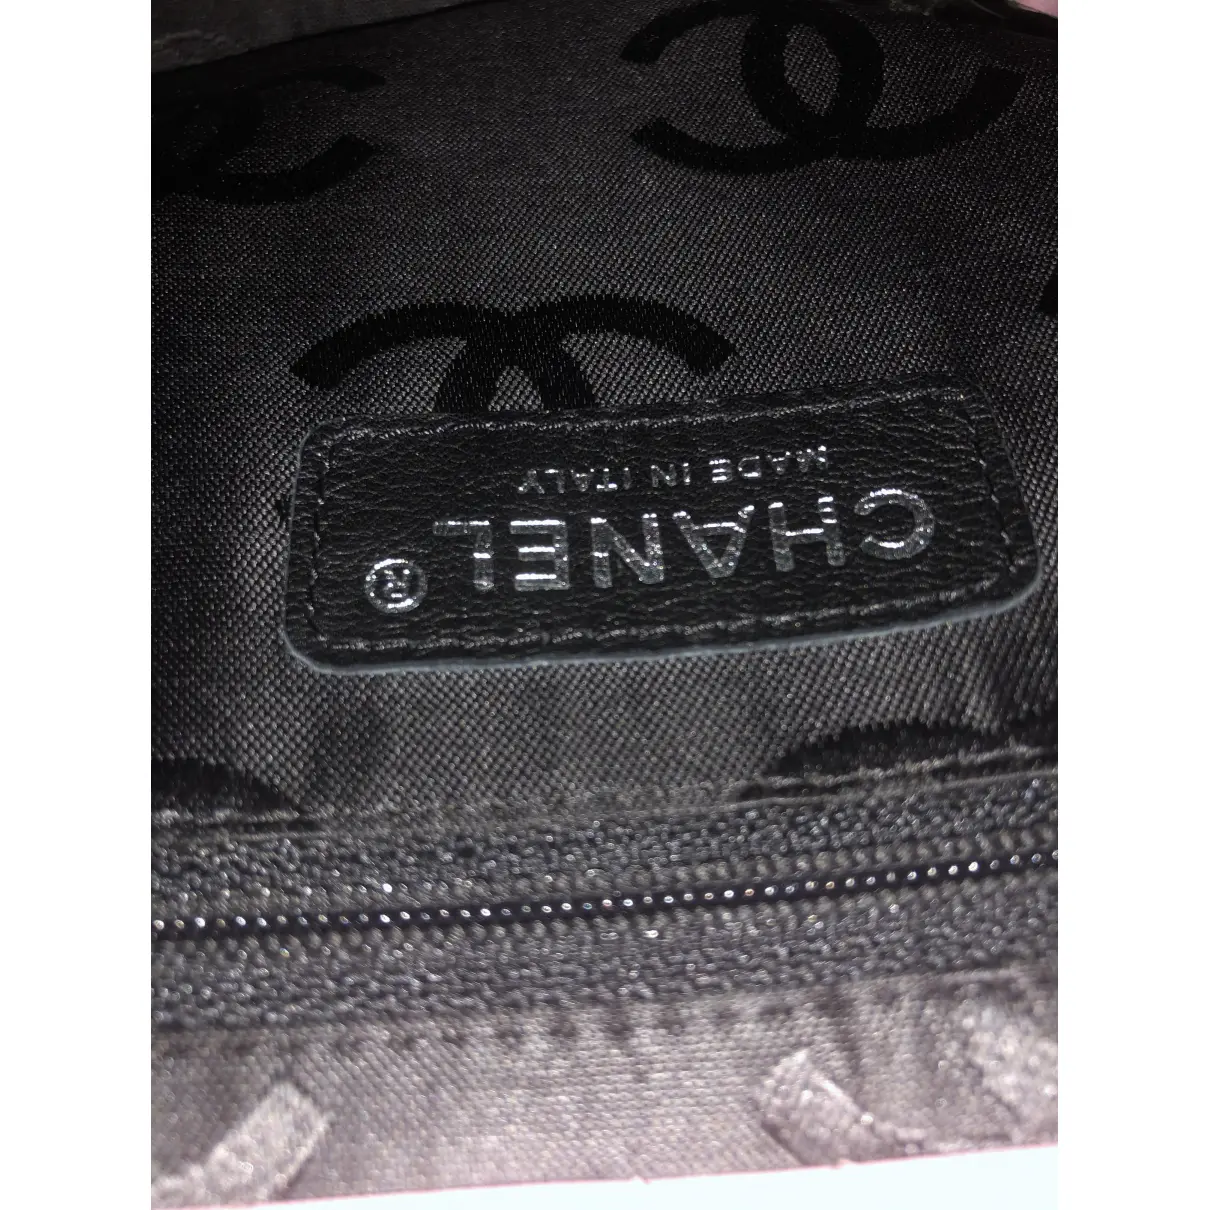 Cambon leather handbag Chanel - Vintage